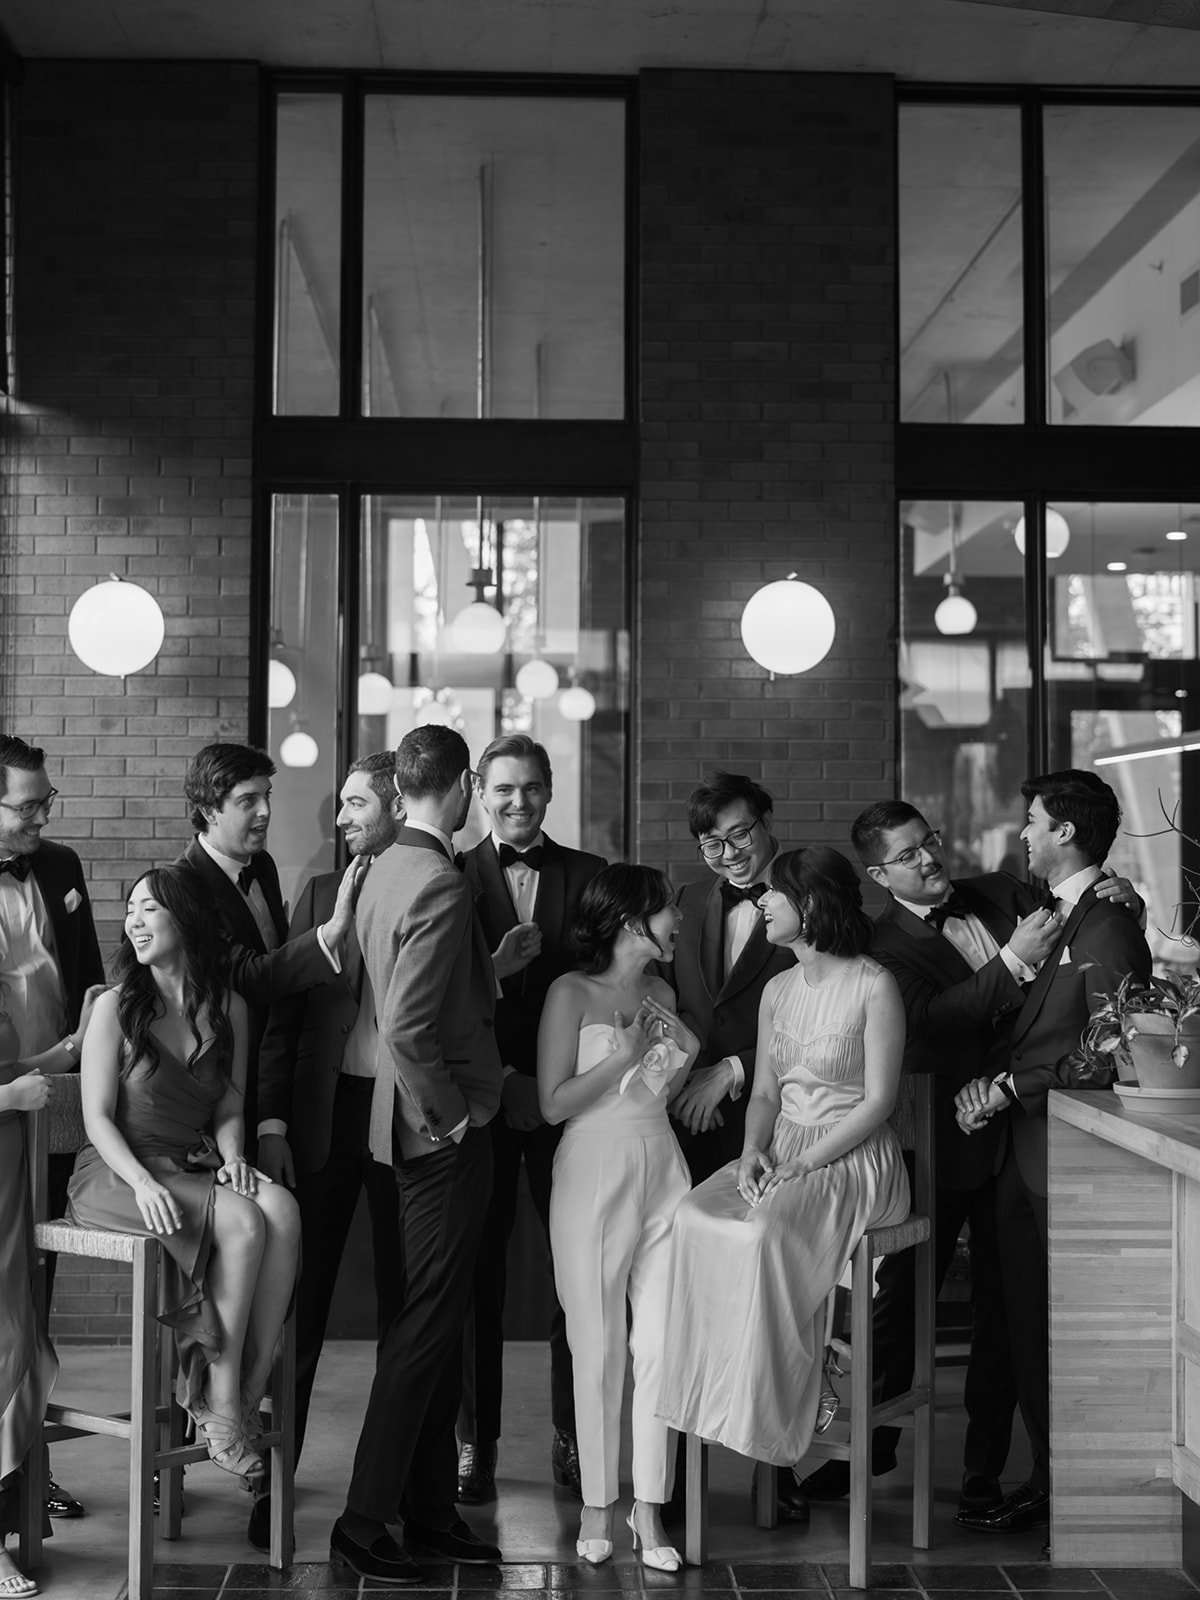 Best-Austin-Candid-Wedding-Photographers-Film-Documentary-35mm-Prospect-House-43.jpg